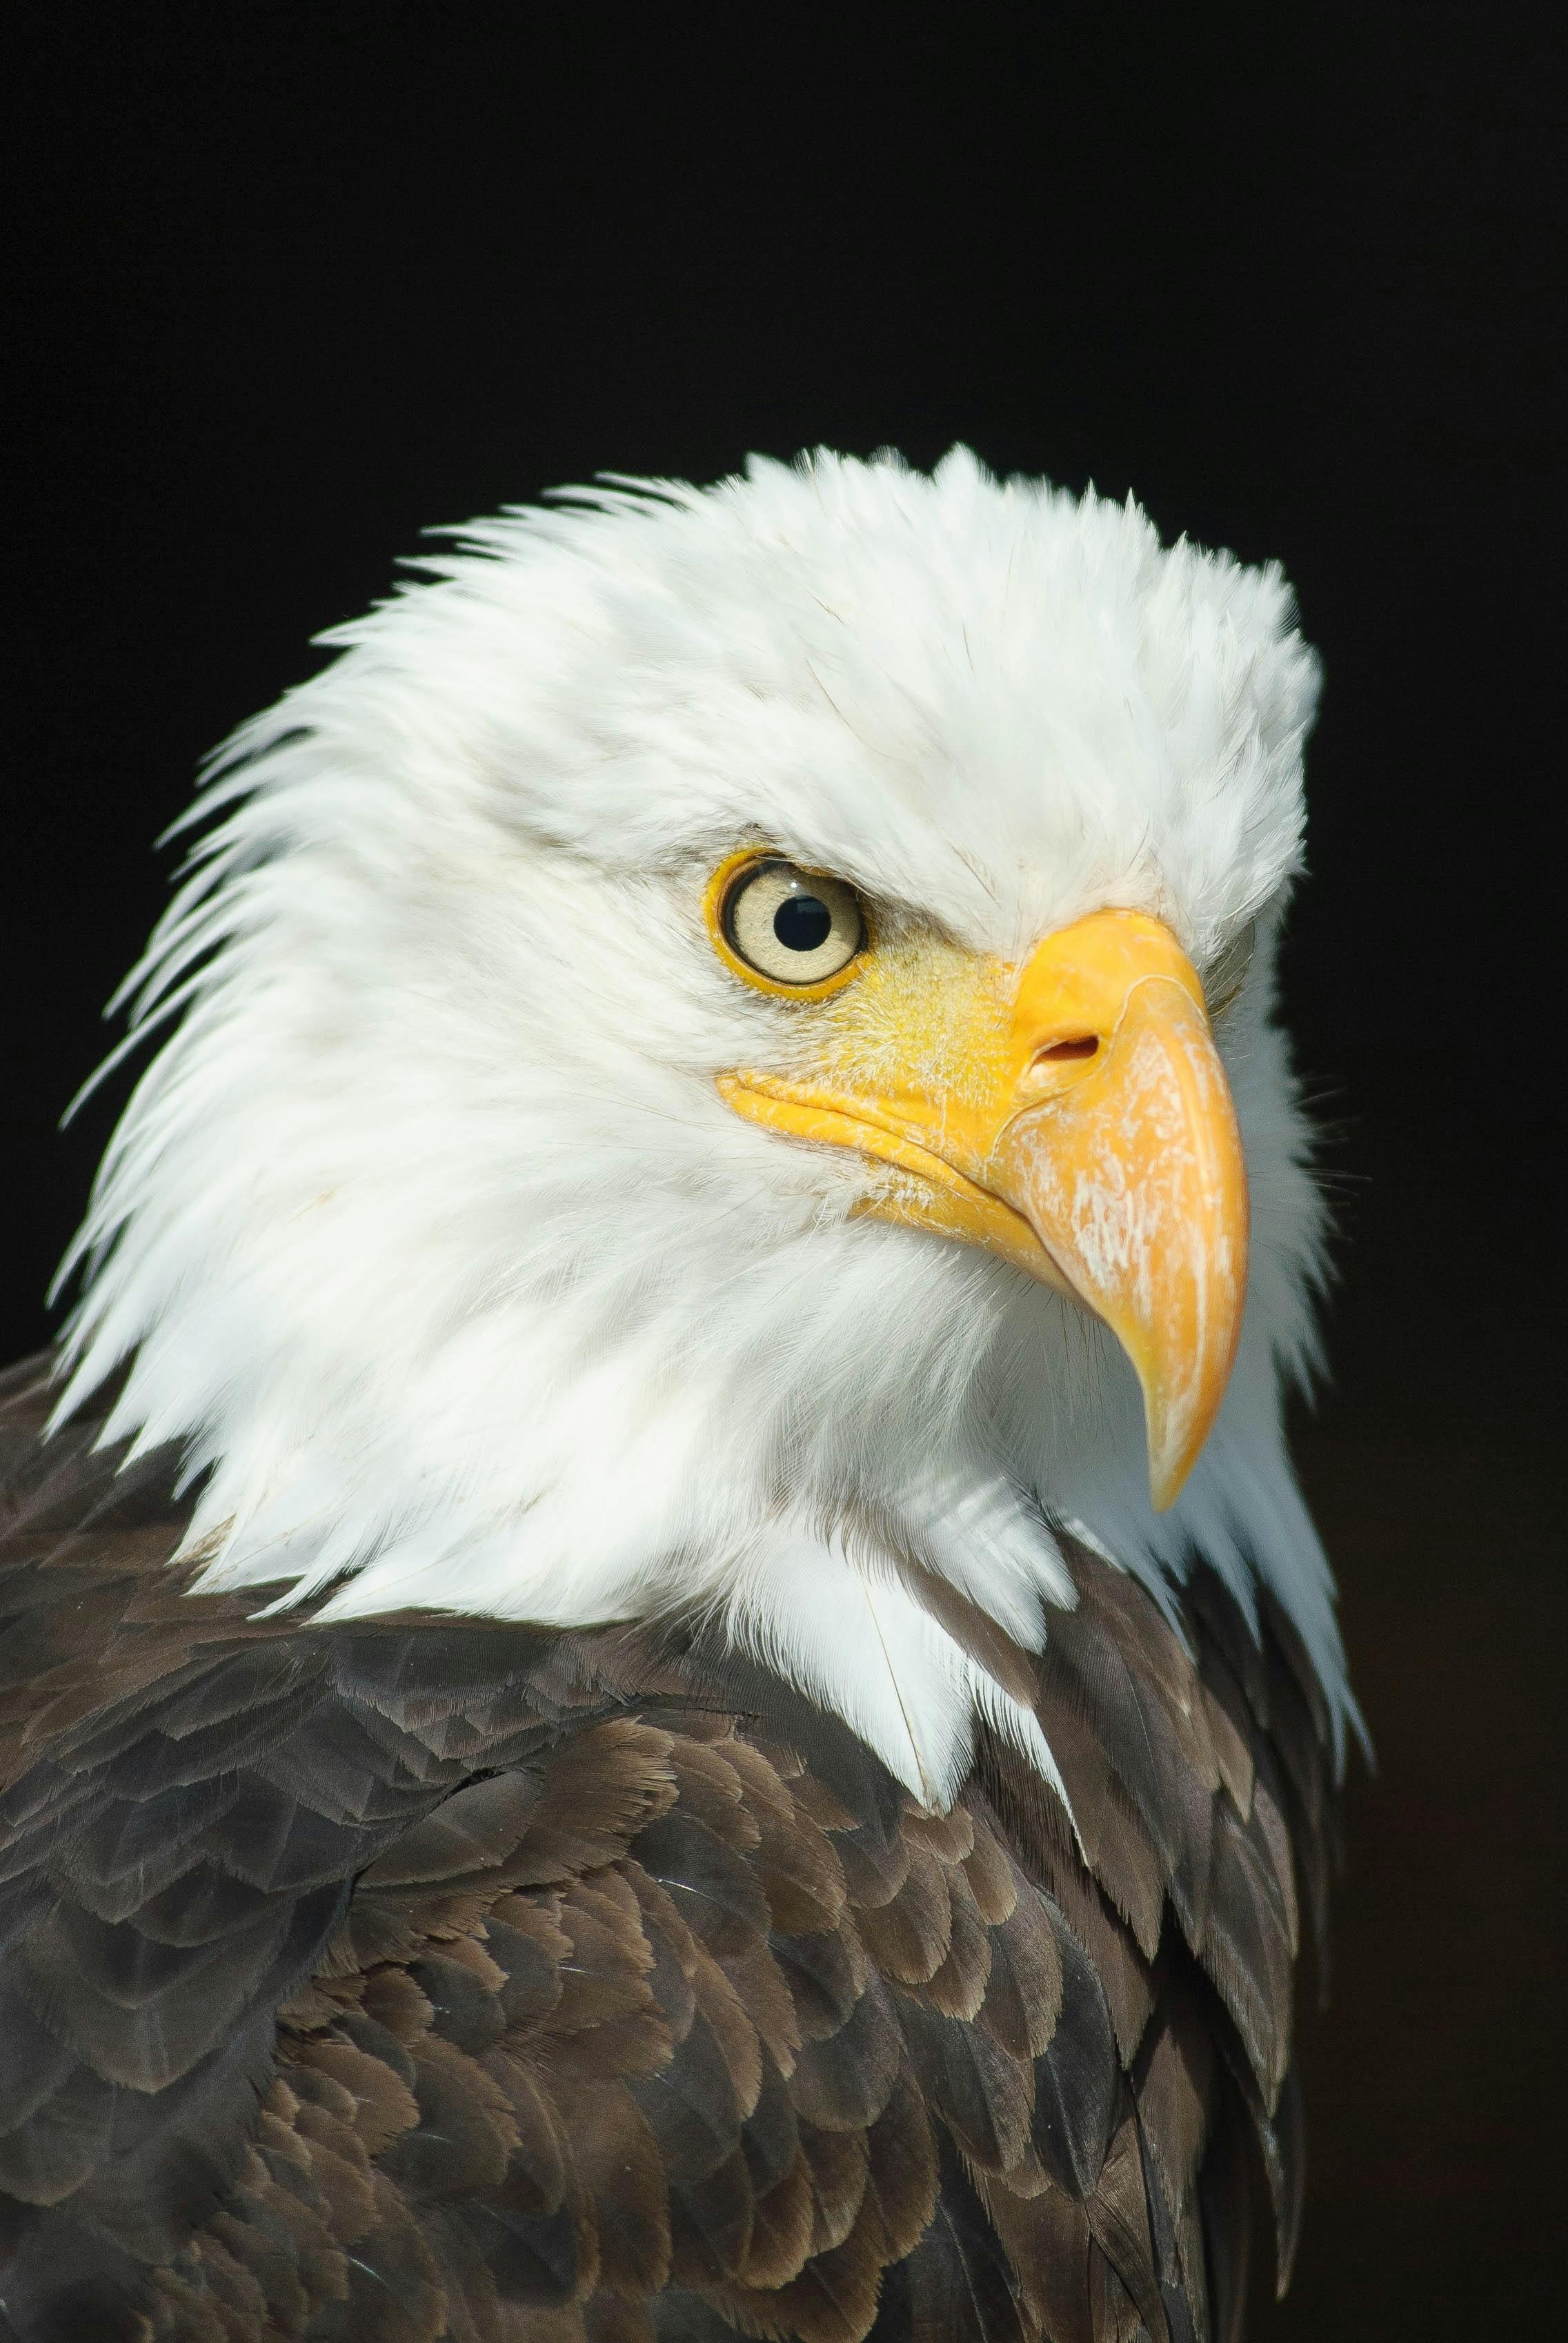 Eagle Bird Photos, Download The BEST Free Eagle Bird Stock Photos